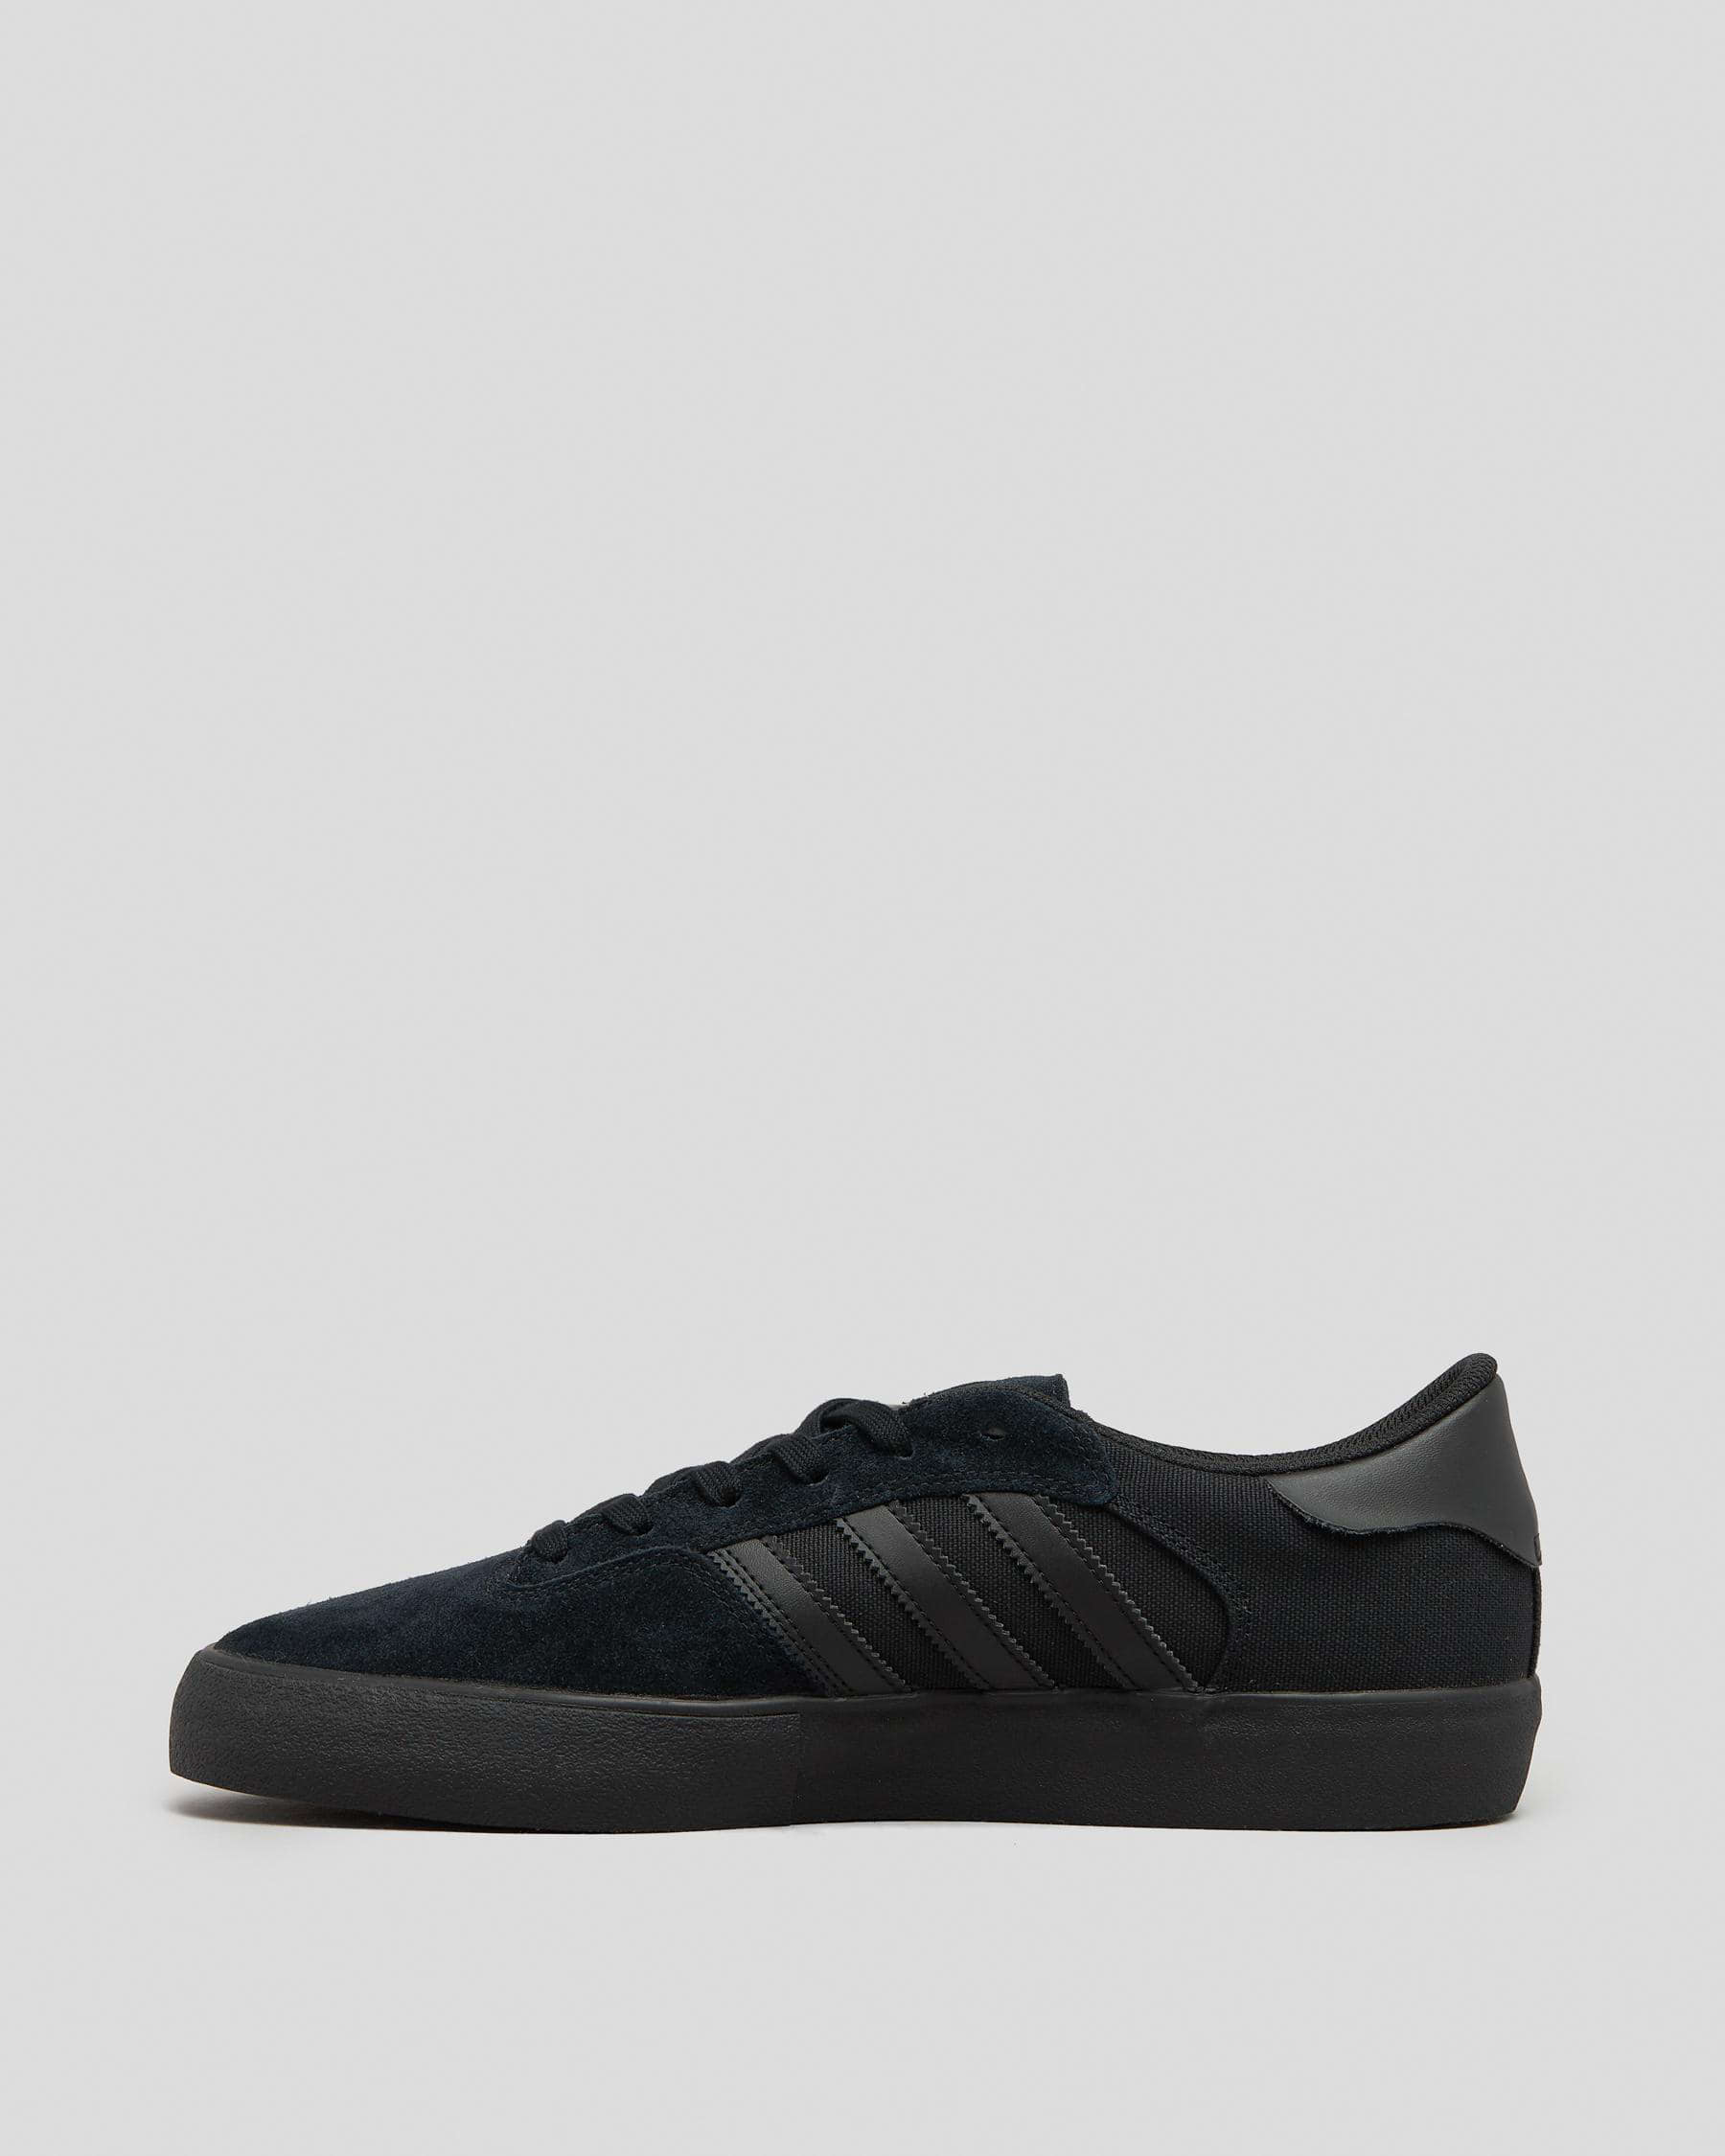 Adidas Matchbreak Super Shoes In Core Black/core Black/cardboard - Fast ...